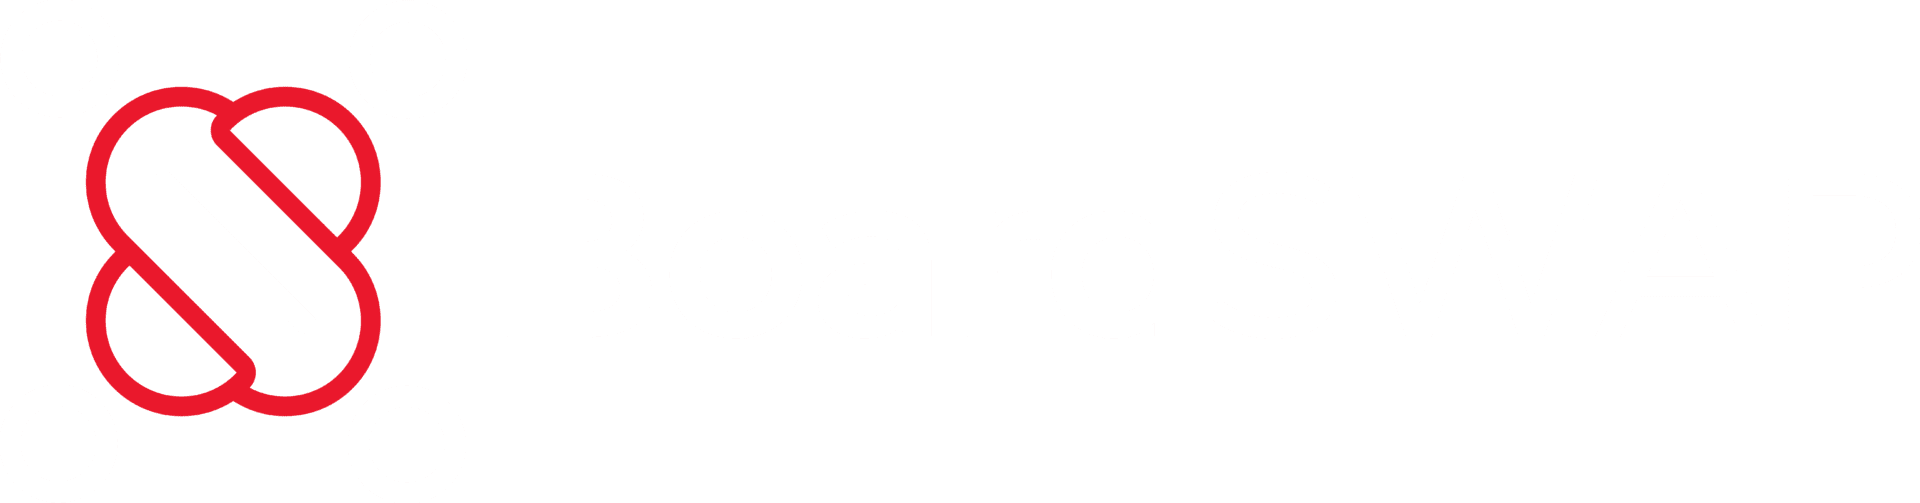 BoardSWAP-Transparent-NoTagline.png